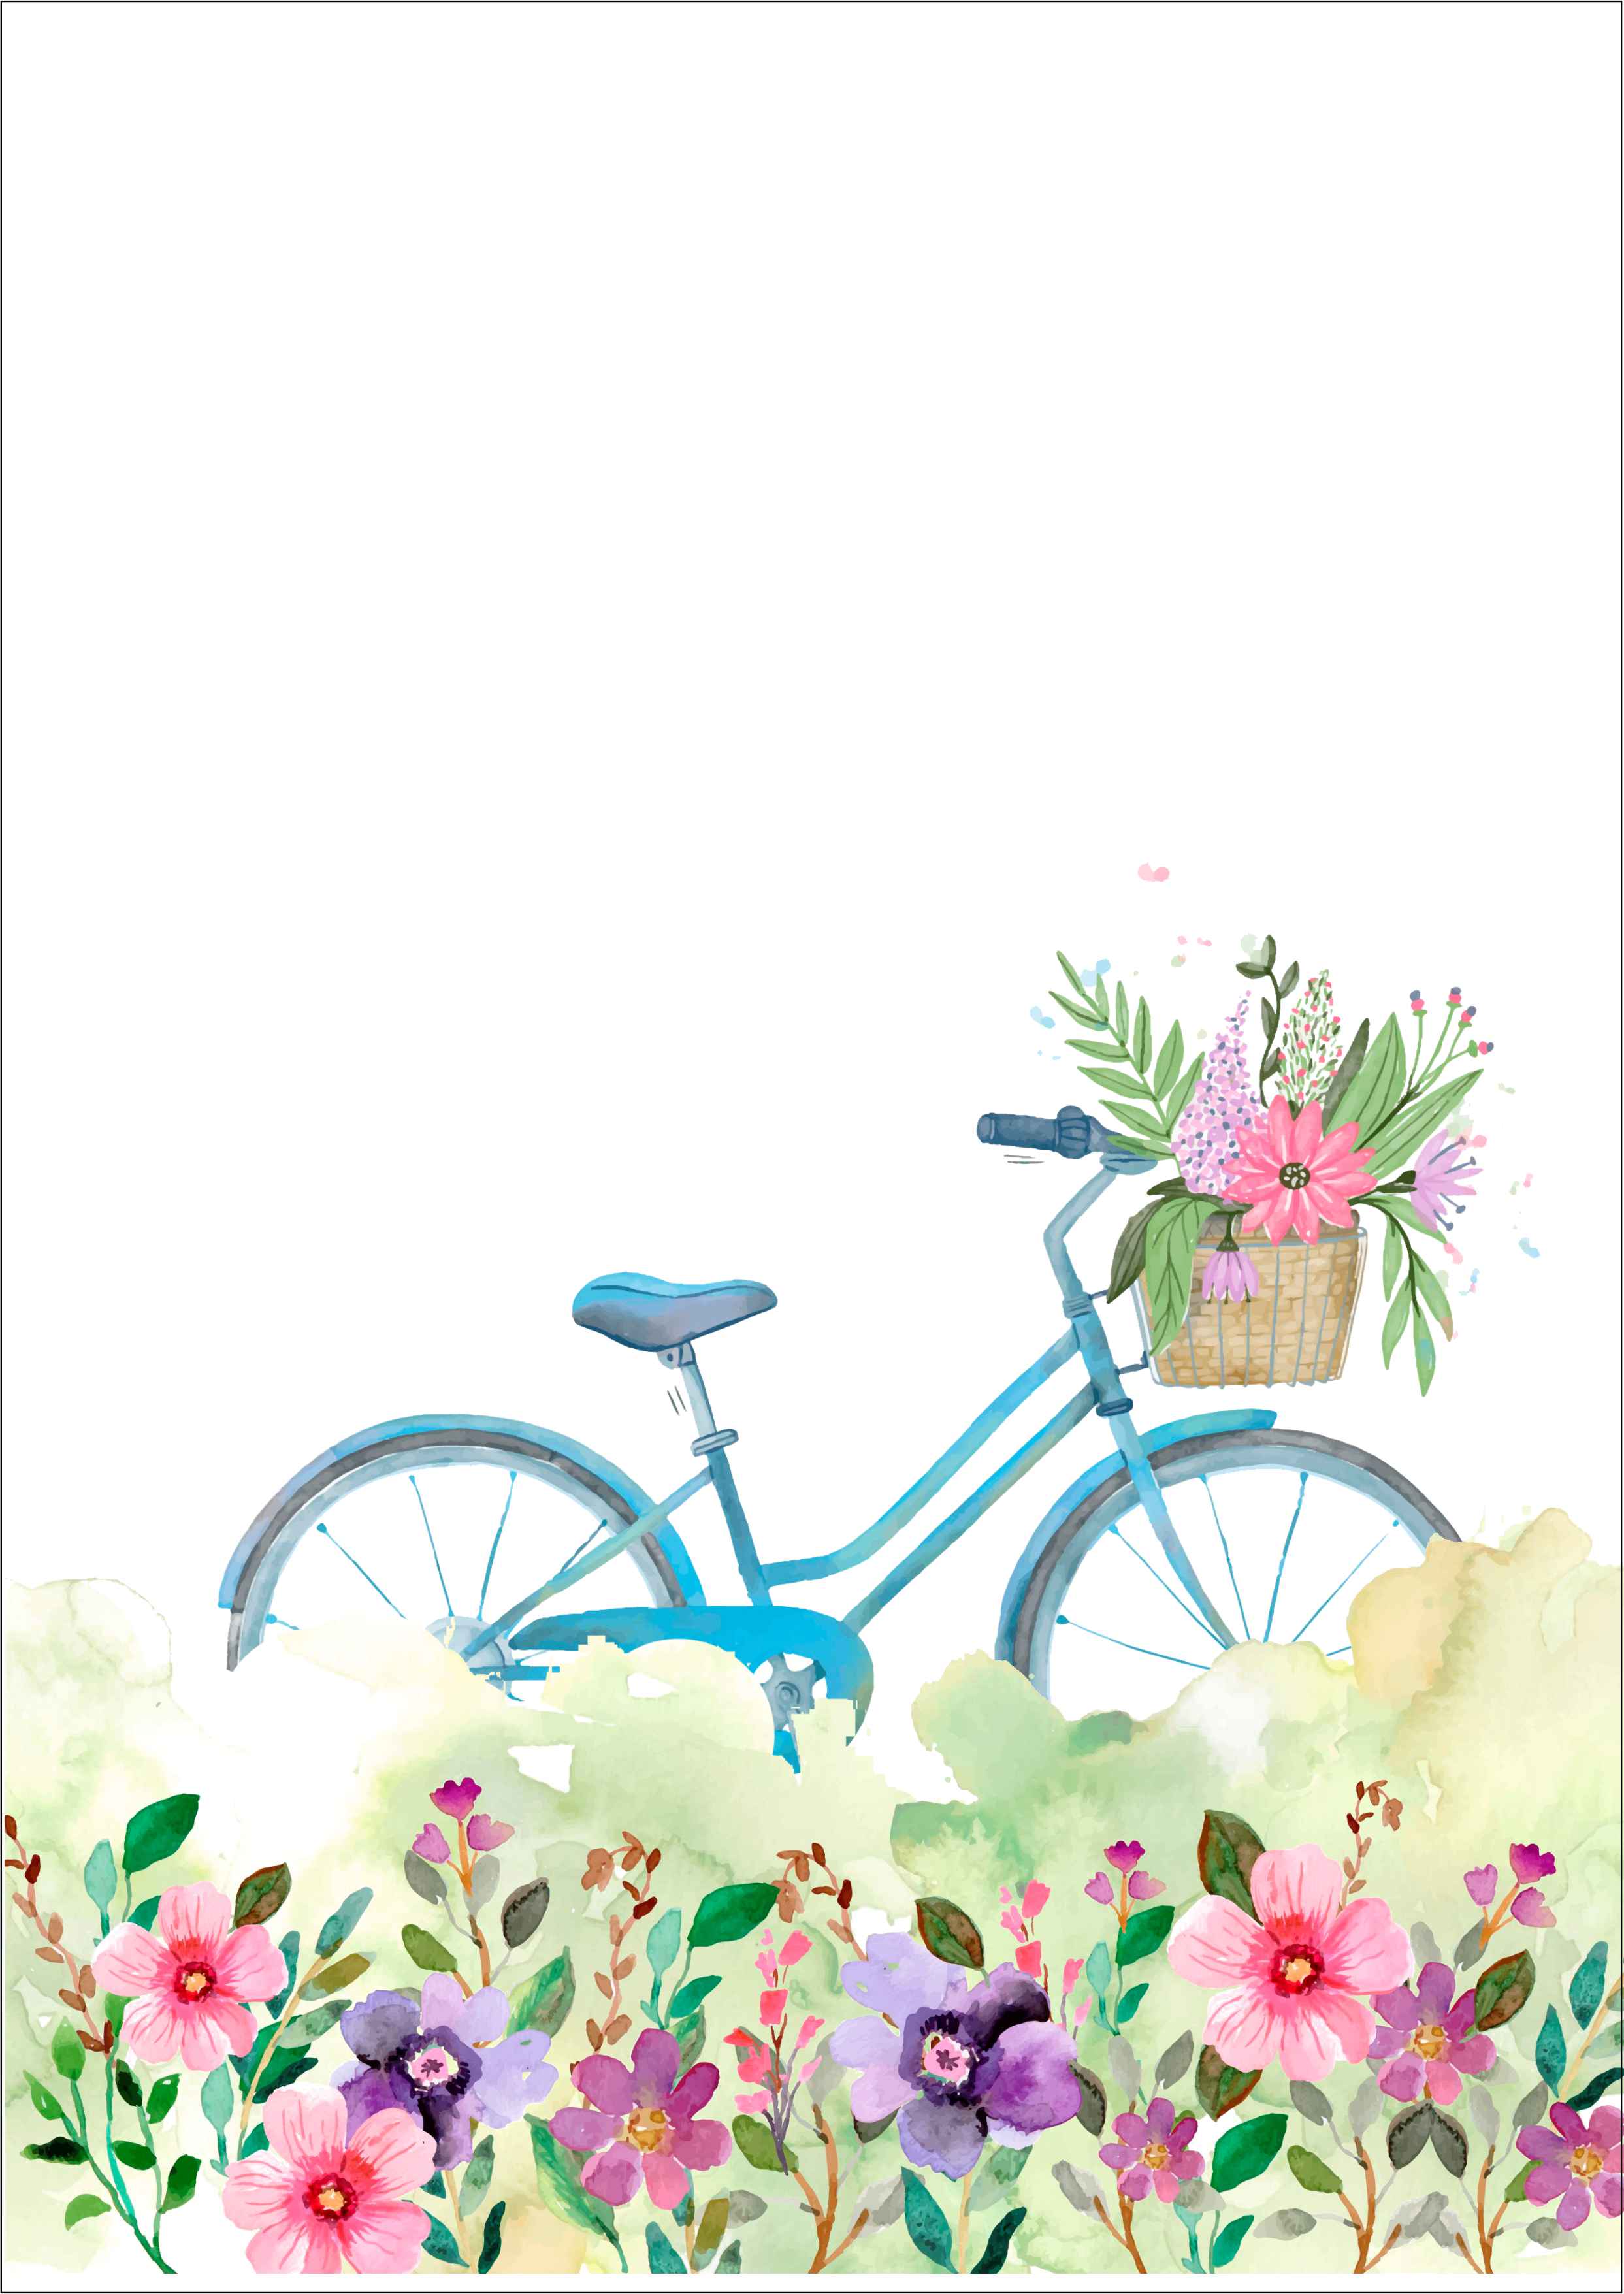 Fahrrad in Blumenwiese